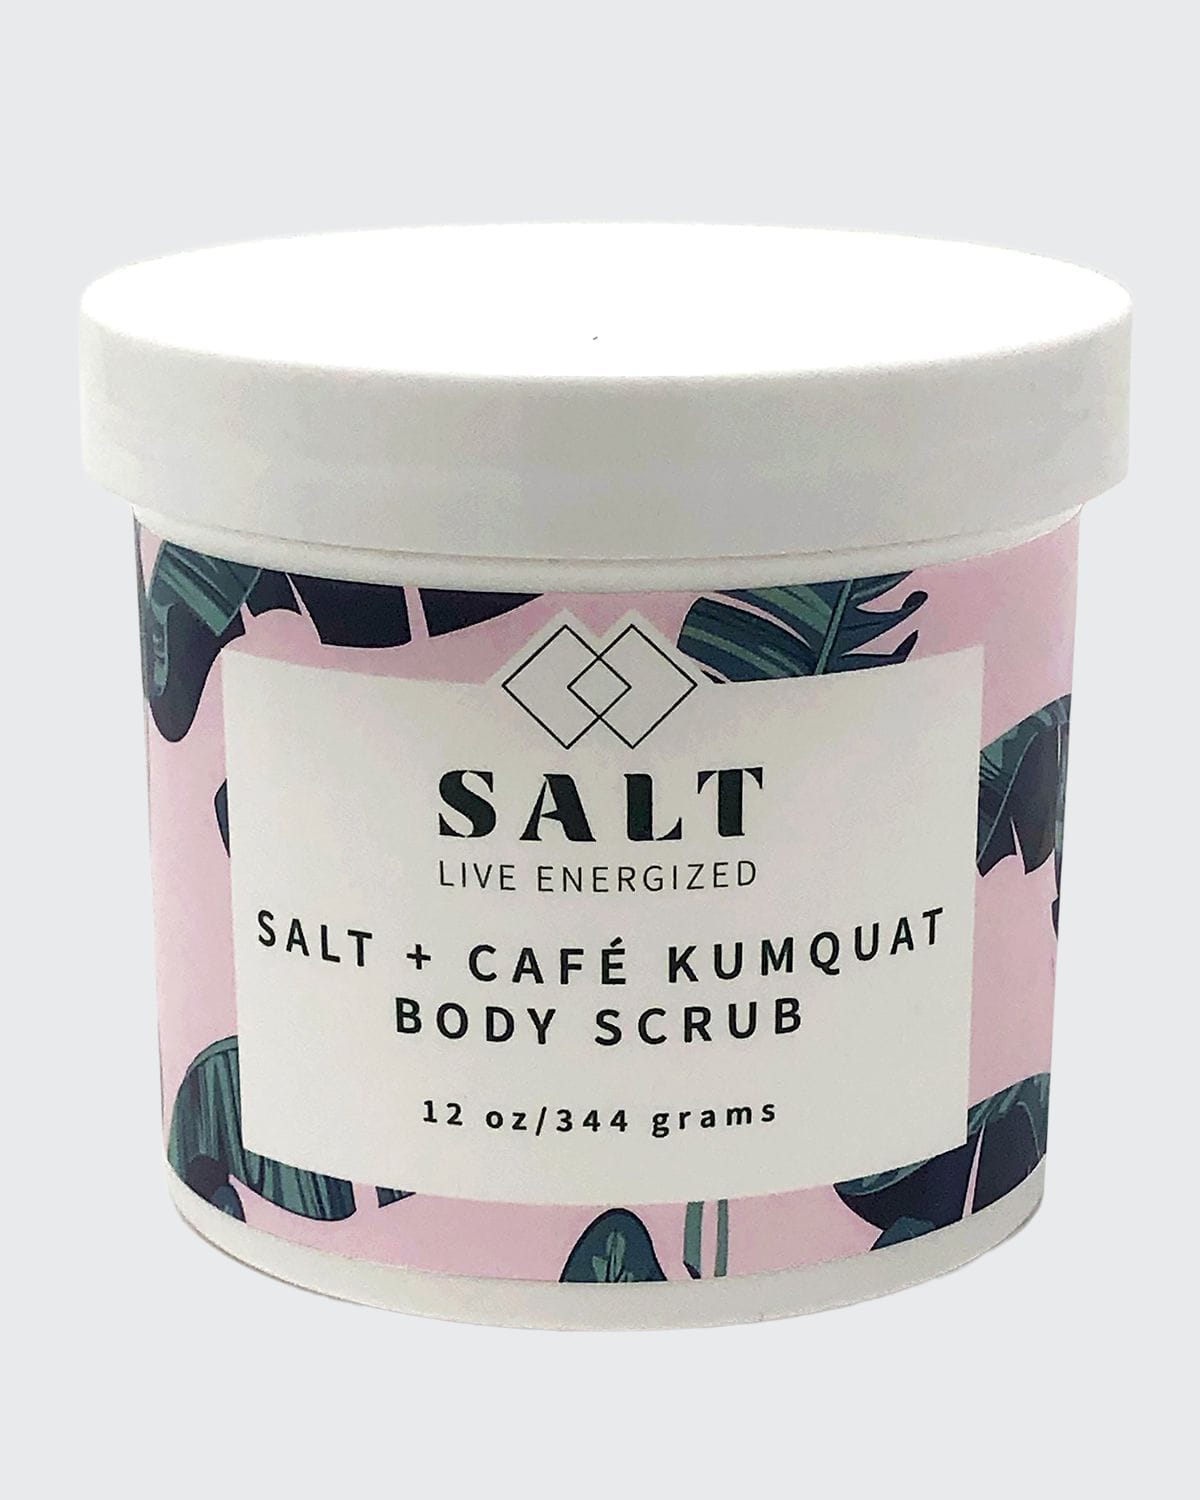 12 oz. Salt + Cafe Kumquat Body Scrub